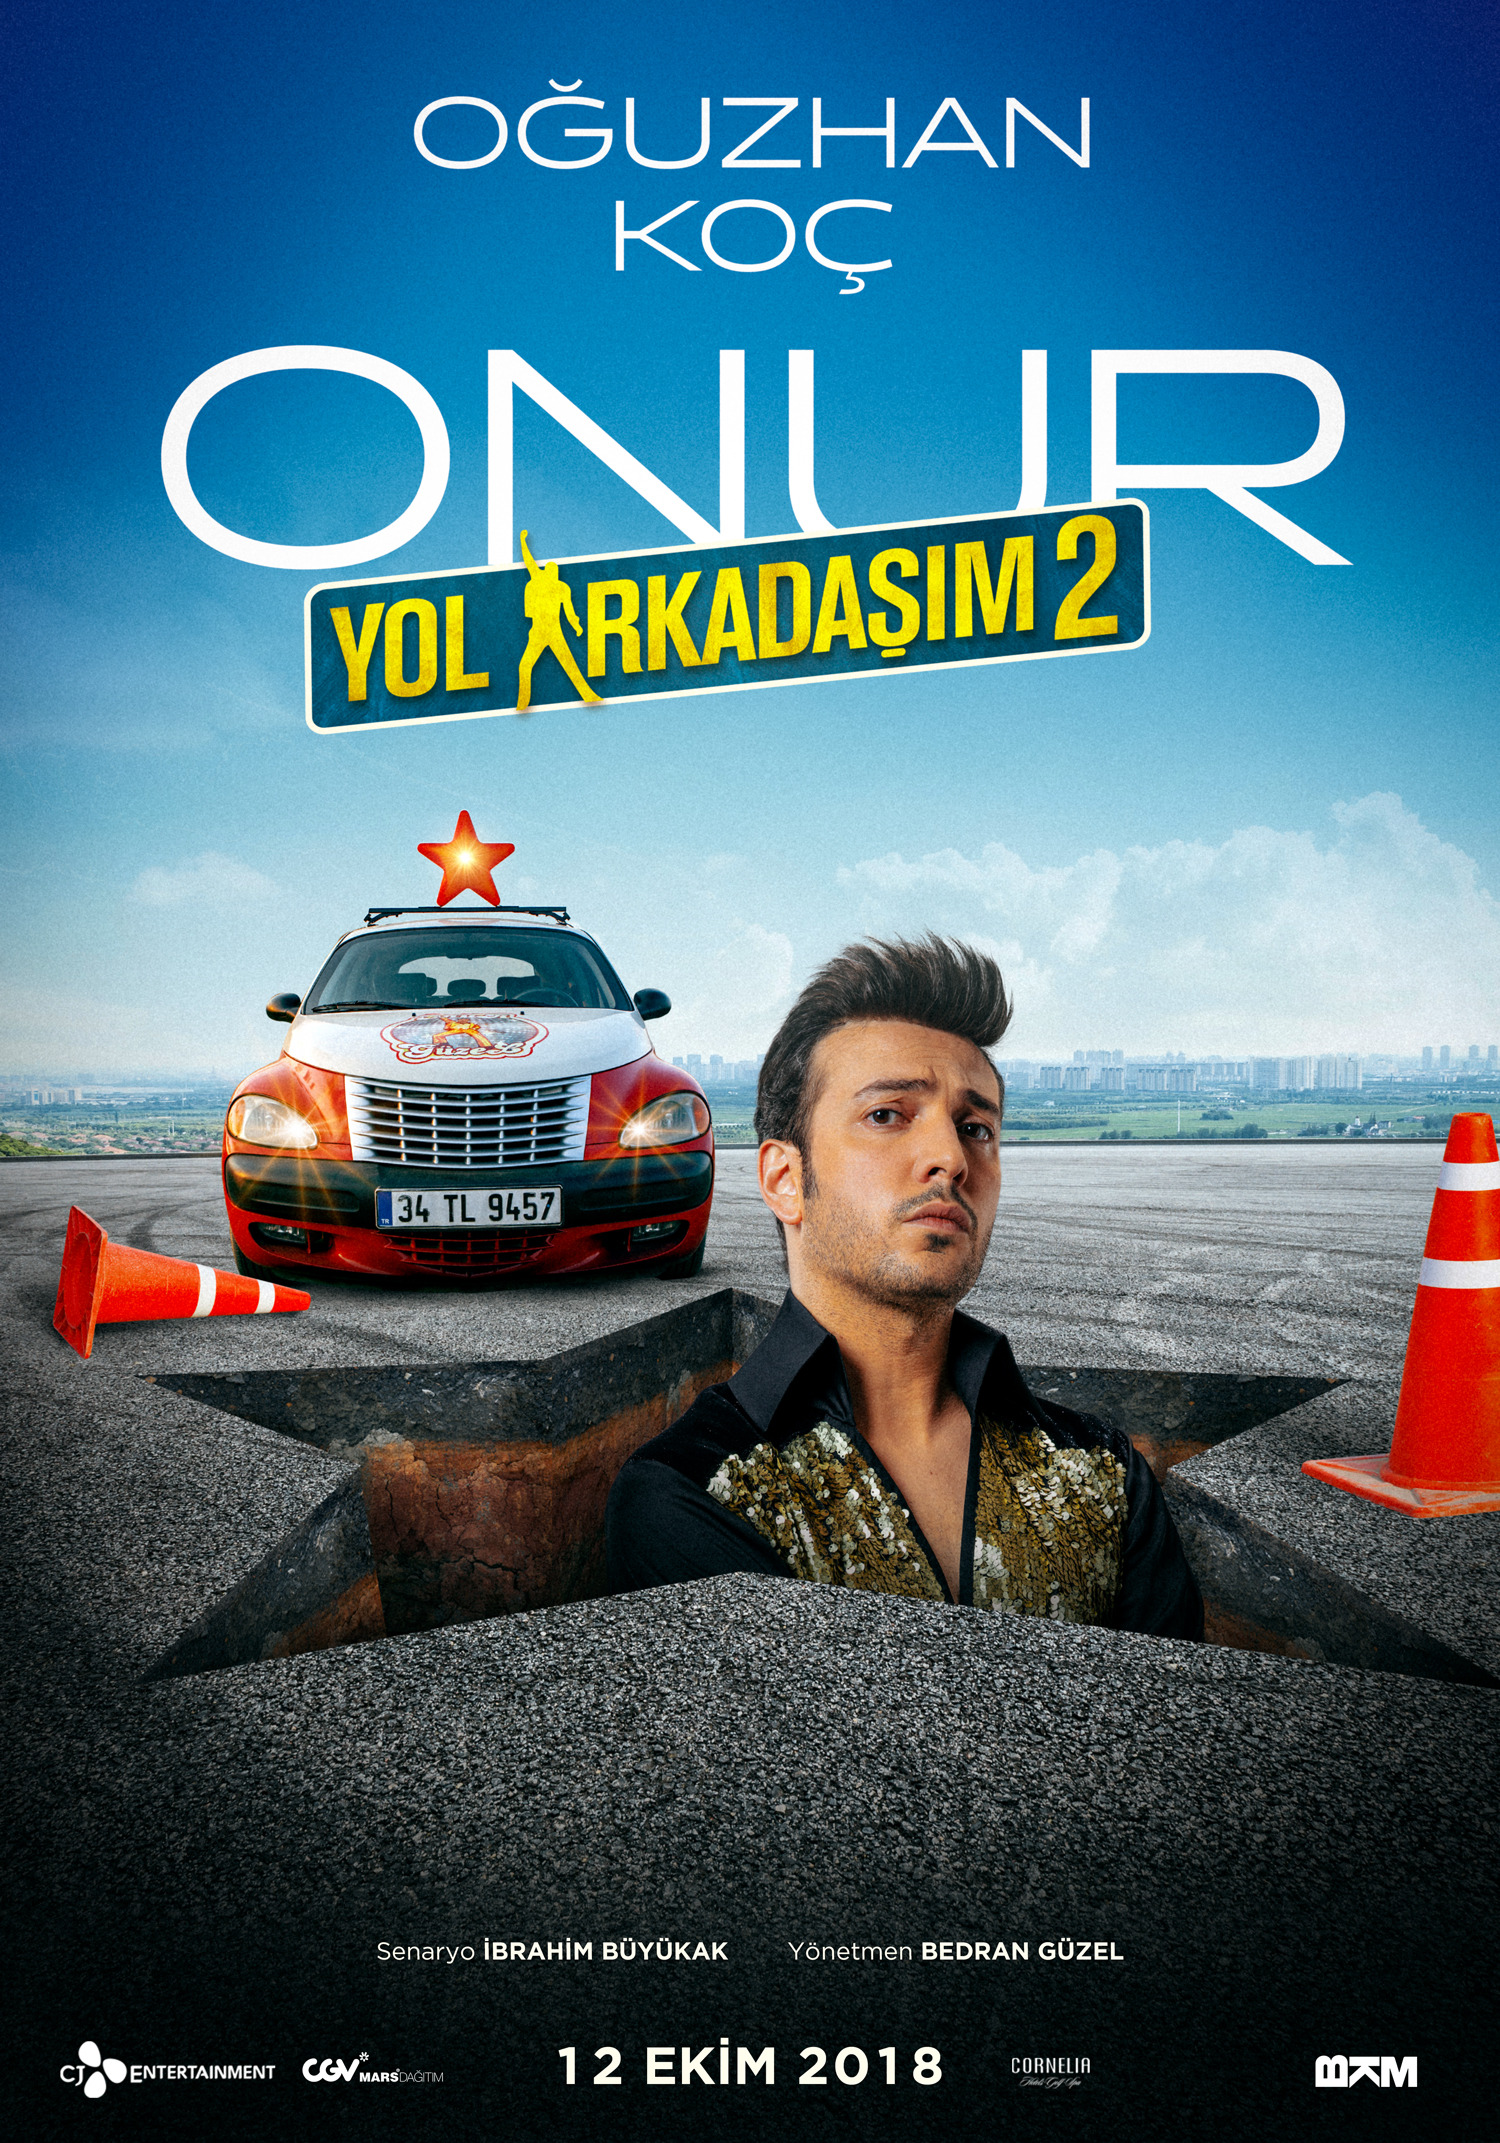 Yol Arkadasim 2 (#3 of 4): Mega Sized Movie Poster Image - IMP Awards